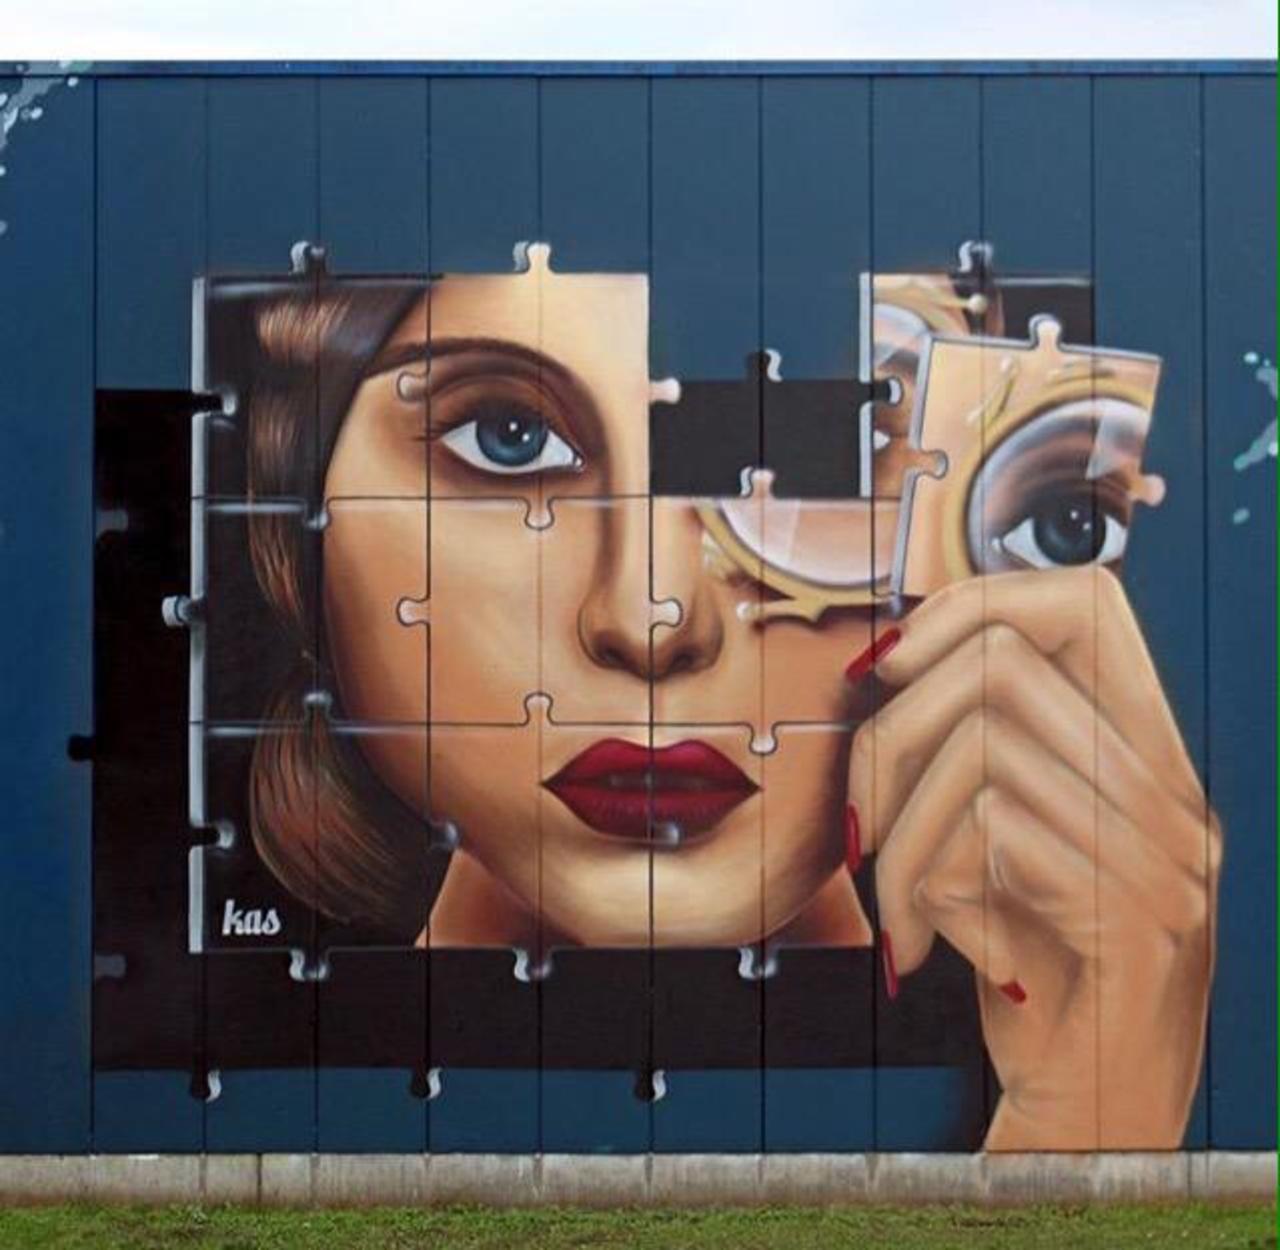 Kas Art's new Street Art "Piece of me" in Aalst Belgium 

#art #graffiti #mural #streetart http://t.co/Je43Kmnss0